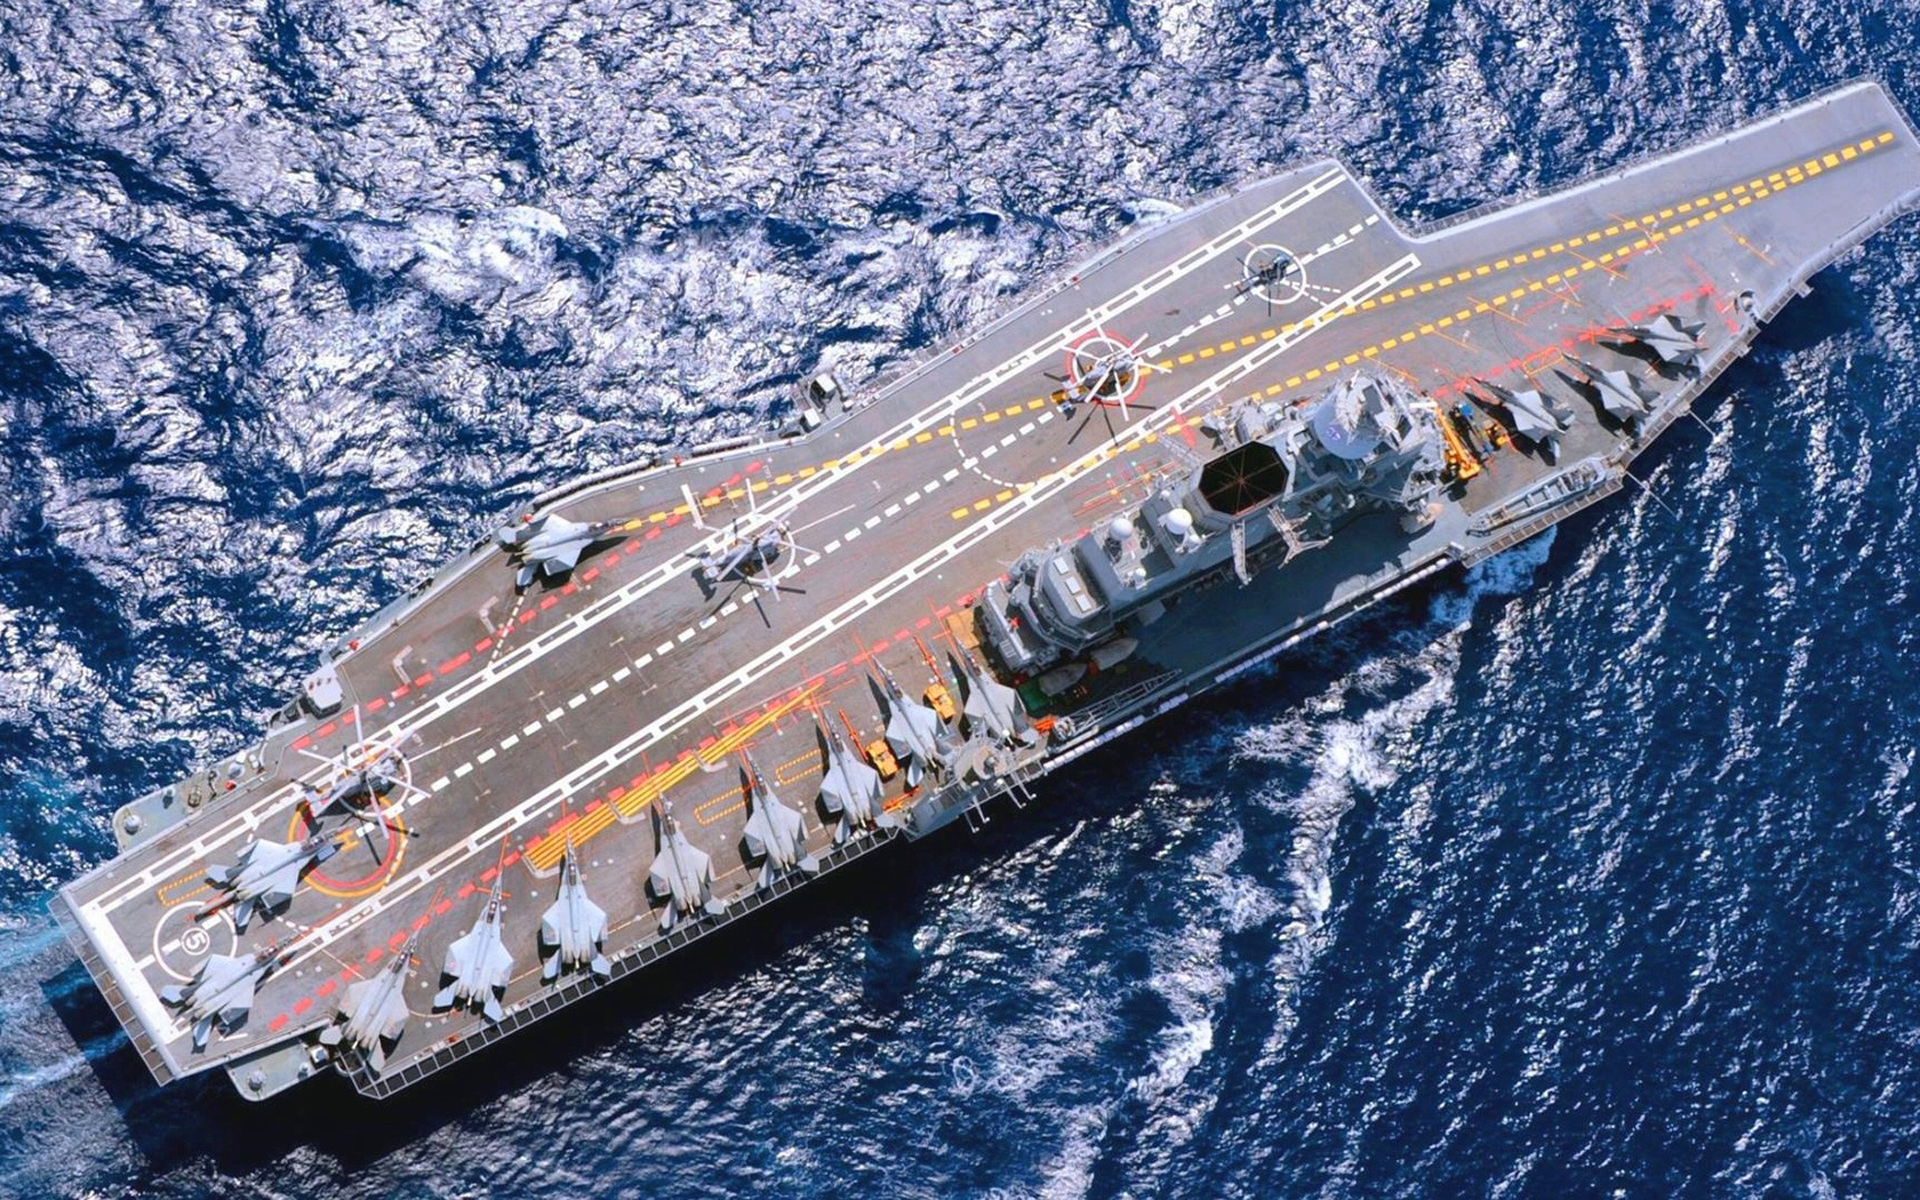 Download wallpaper Vikramaditya, aircraft carrier, sea